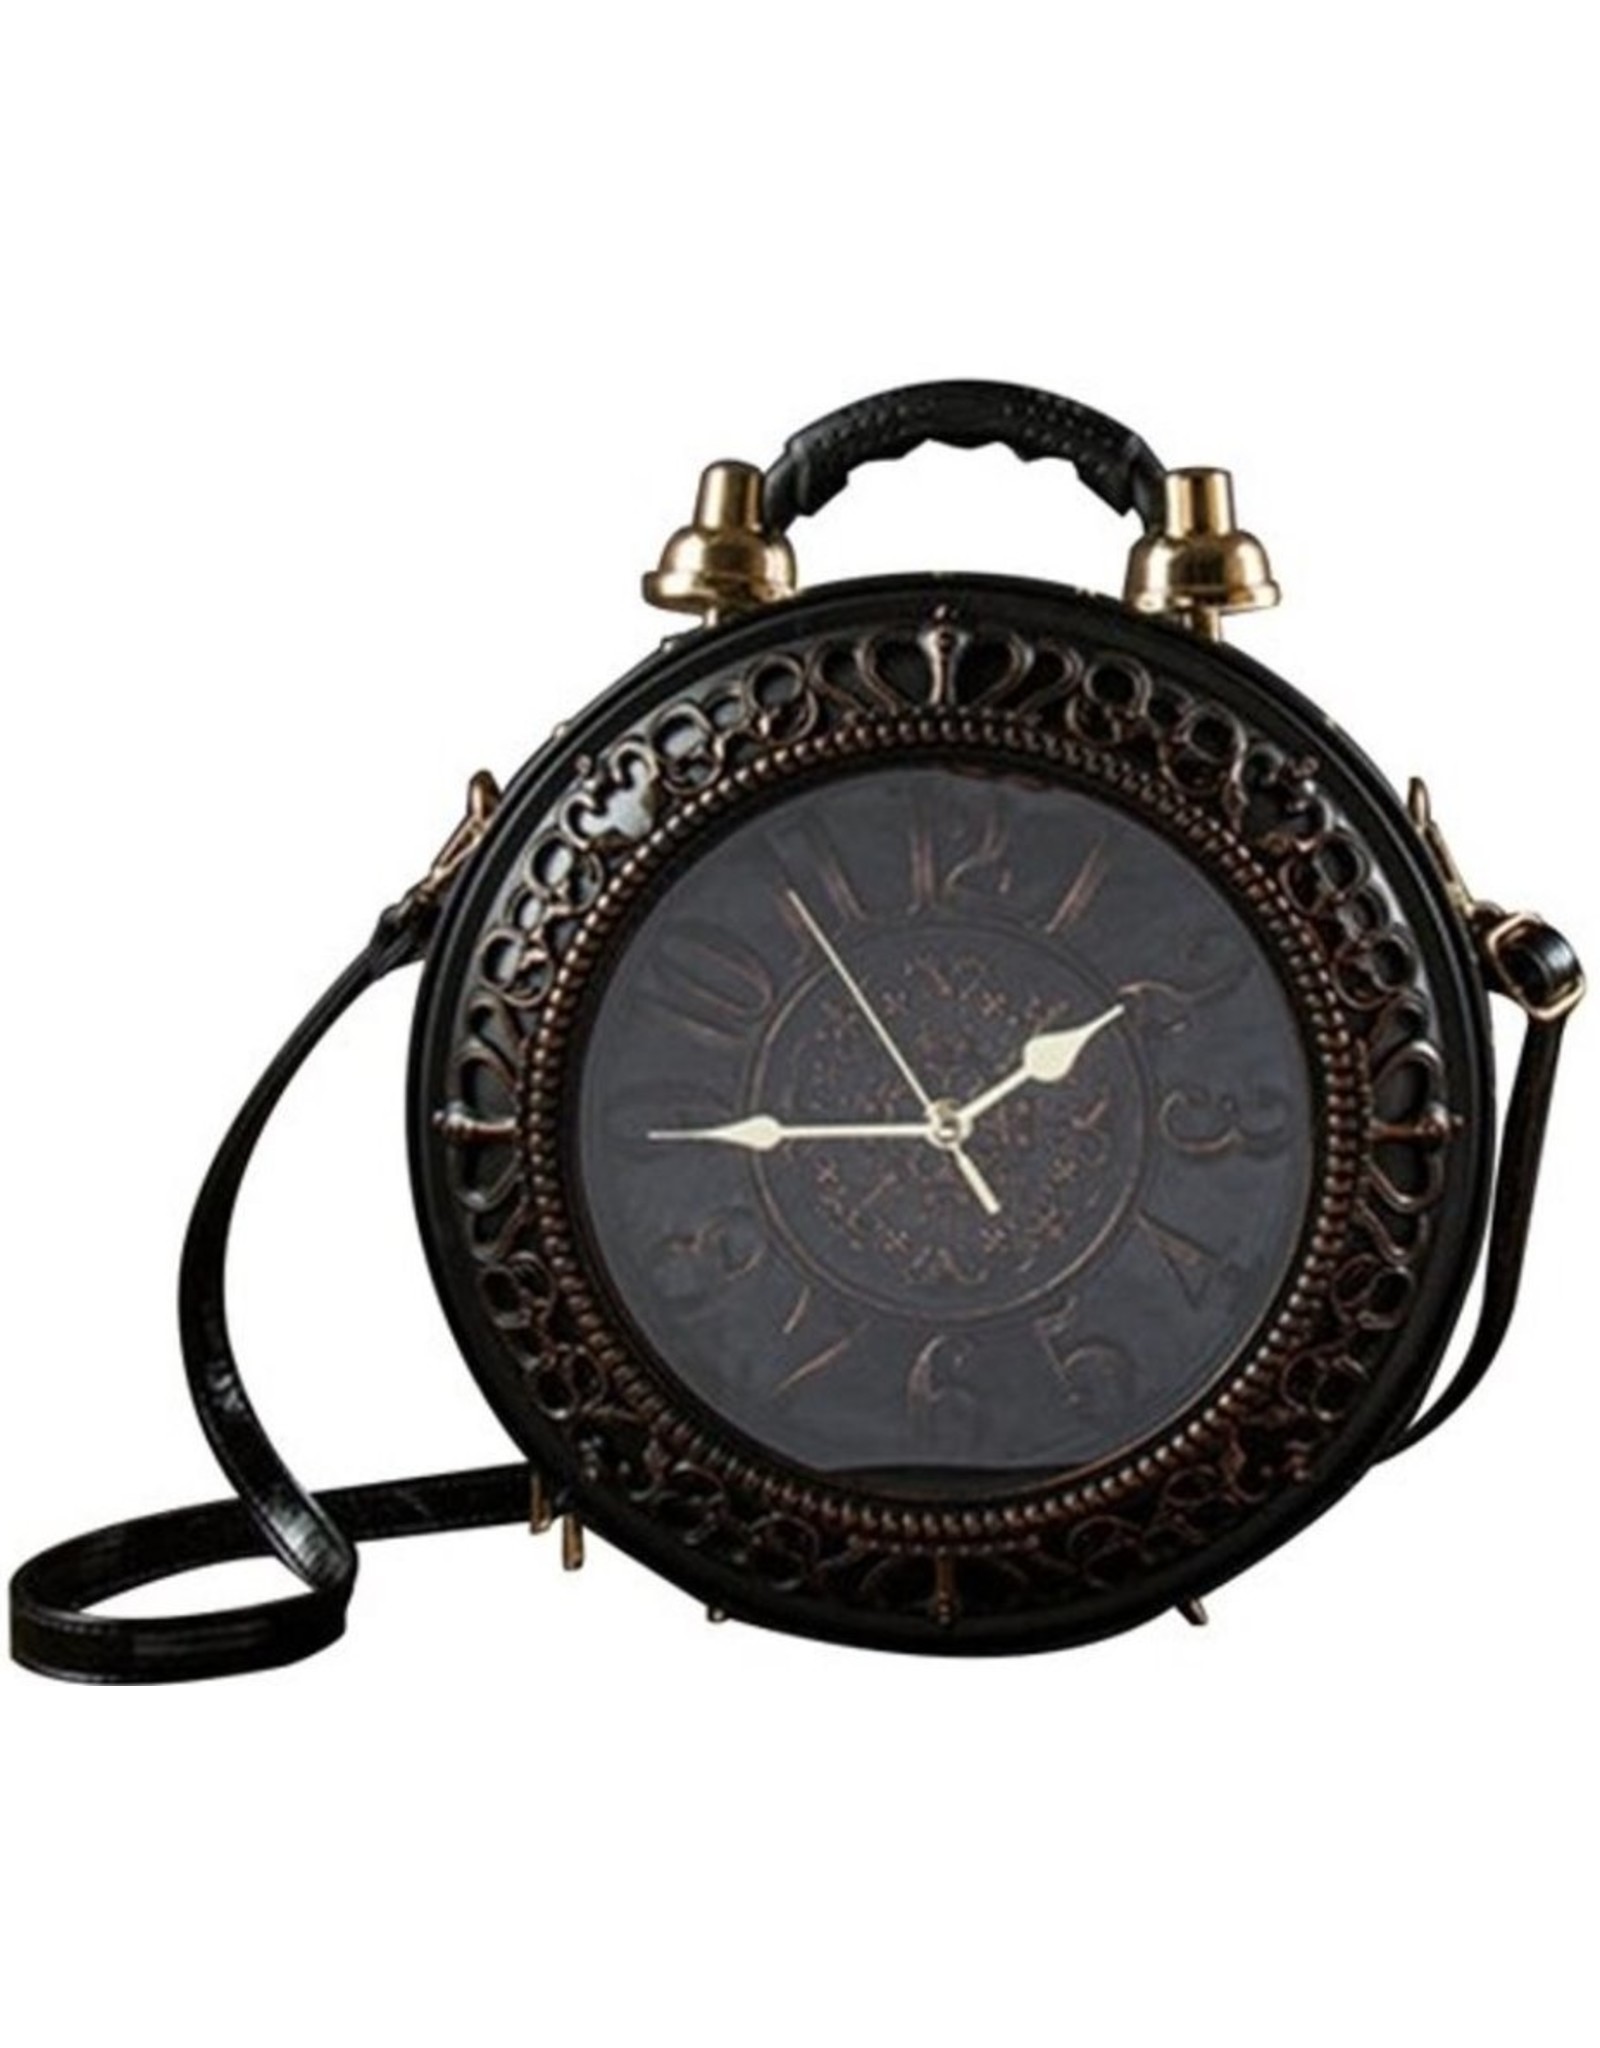 Magic Bags Fantasy bags - Clock bag with Working Clock Vintage Black large